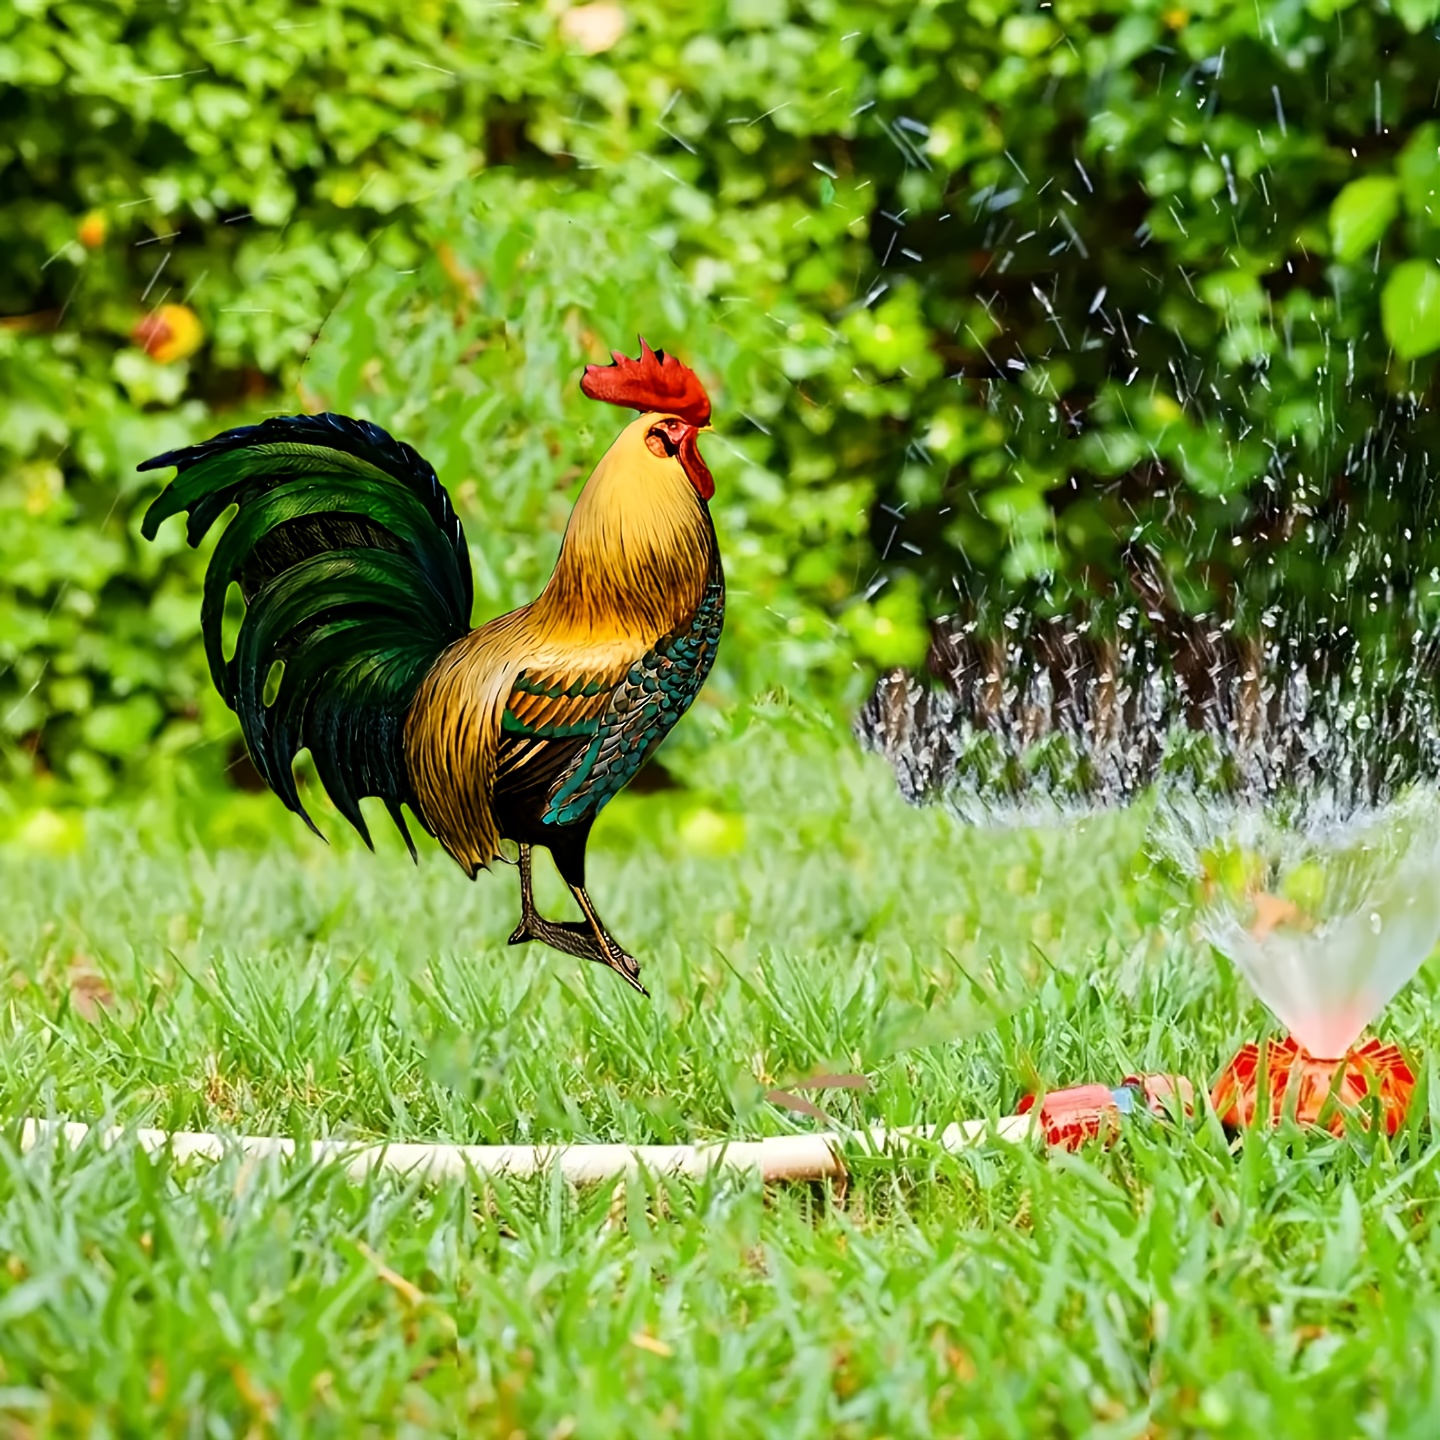 

1pc Lifelike Acrylic Rooster Garden Stake - Durable Outdoor Yard Decor